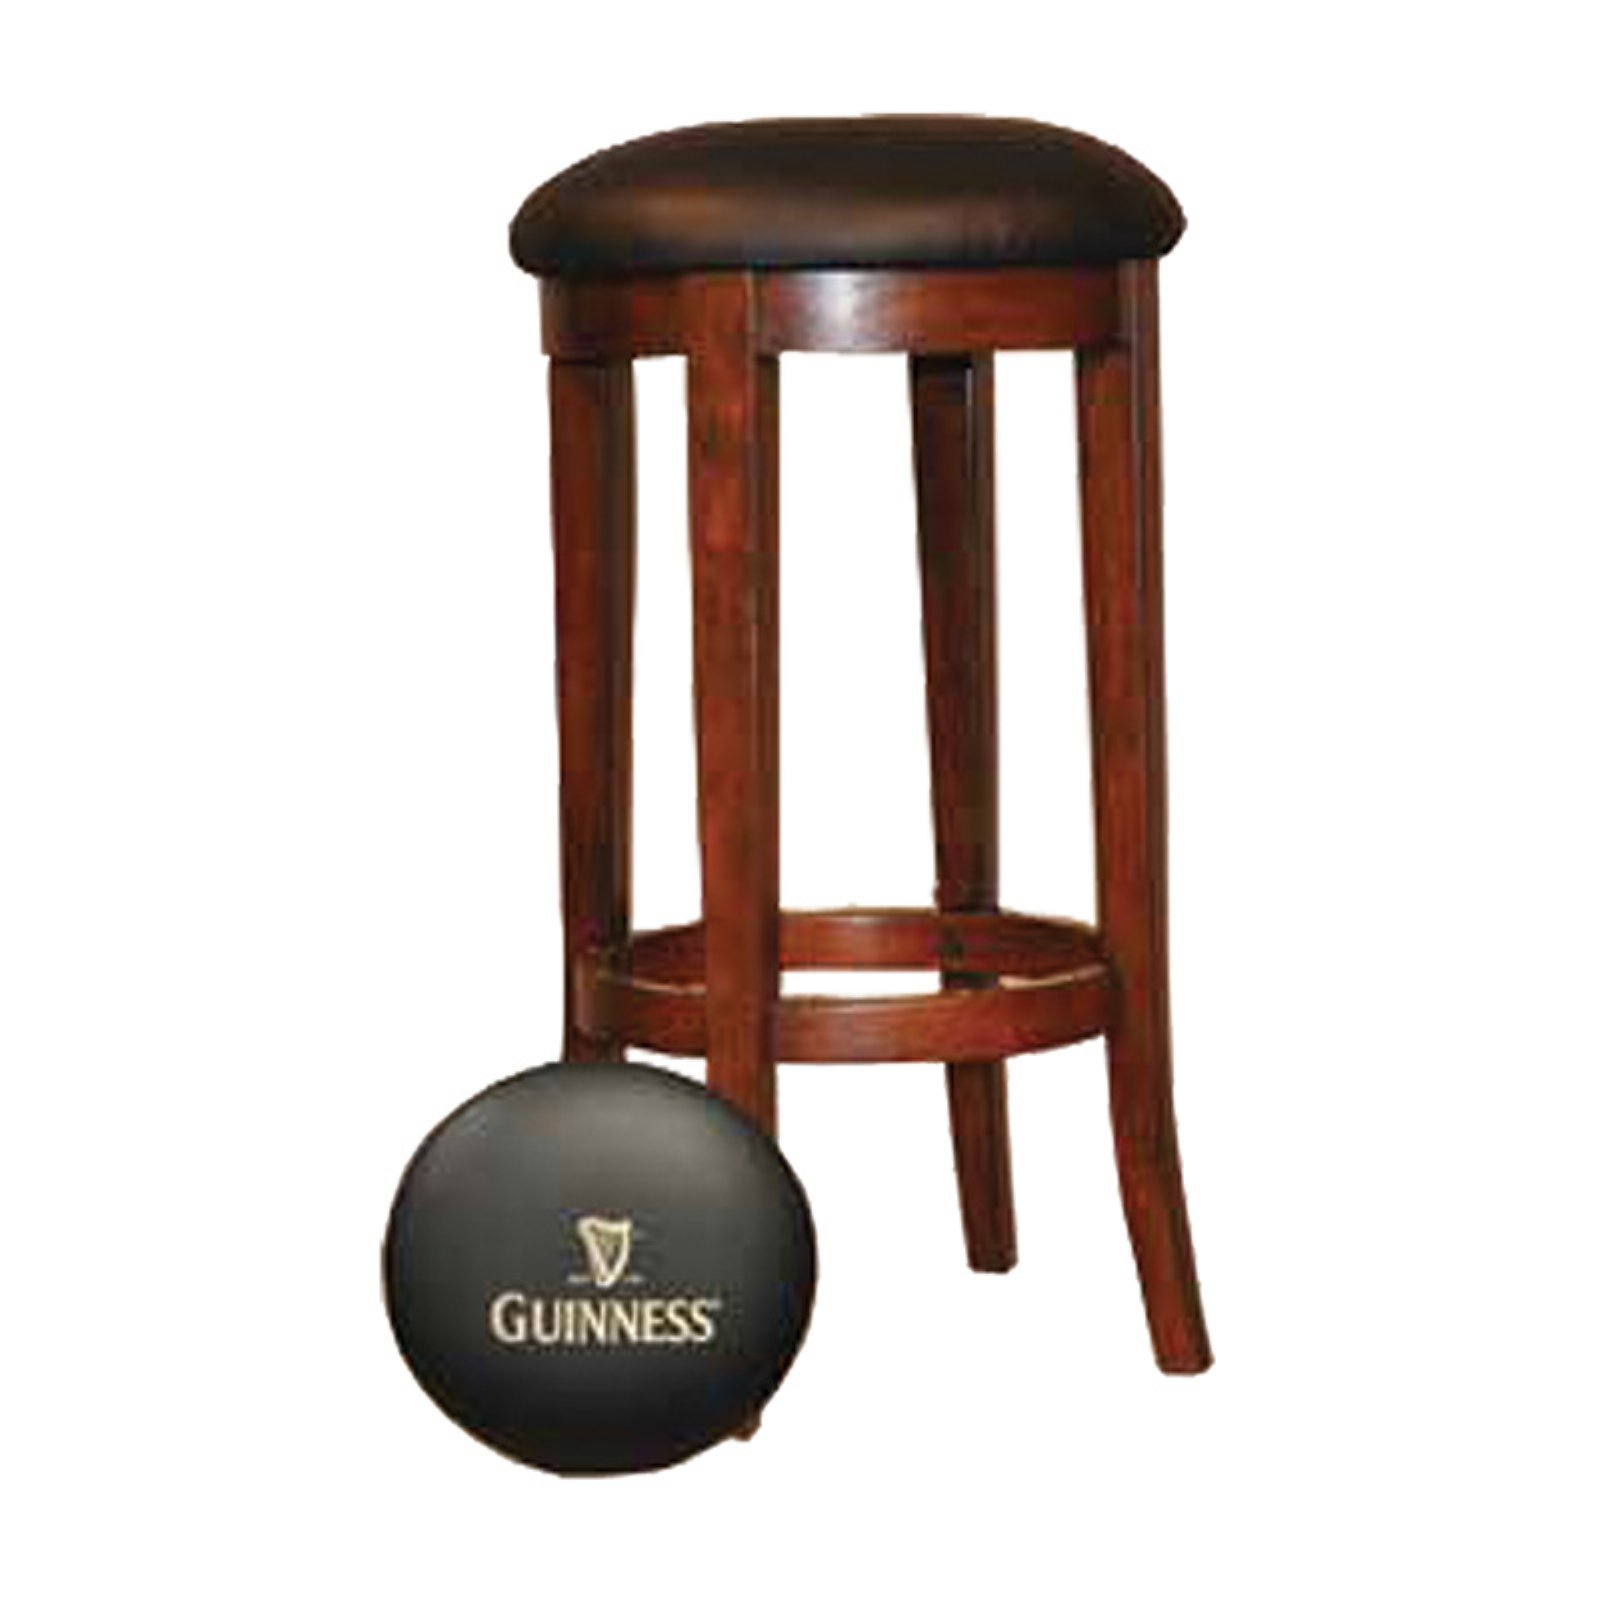 Guinness pub table